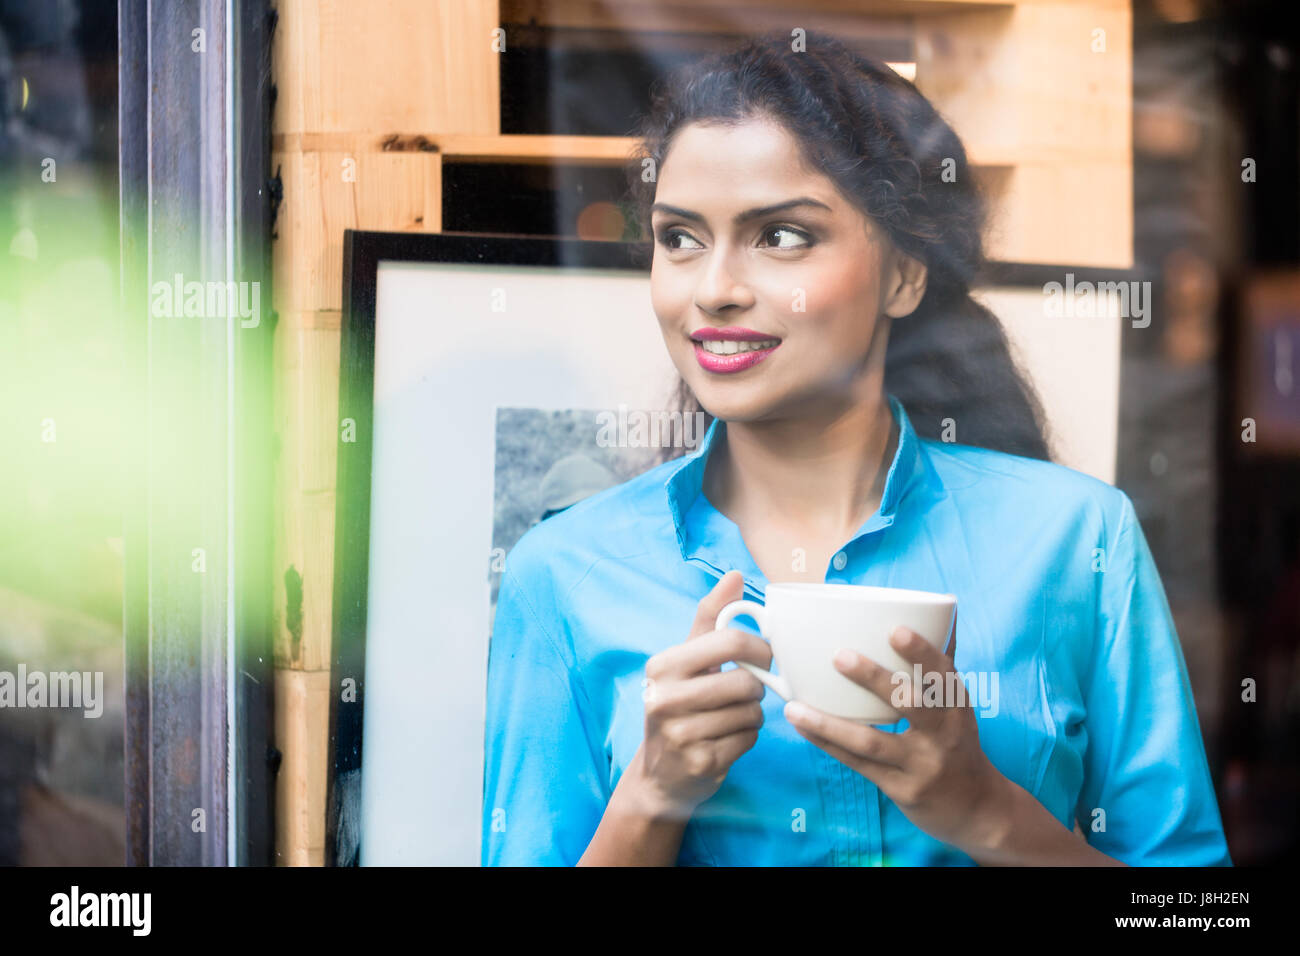 Indian woman with coffee mug Stock Photo